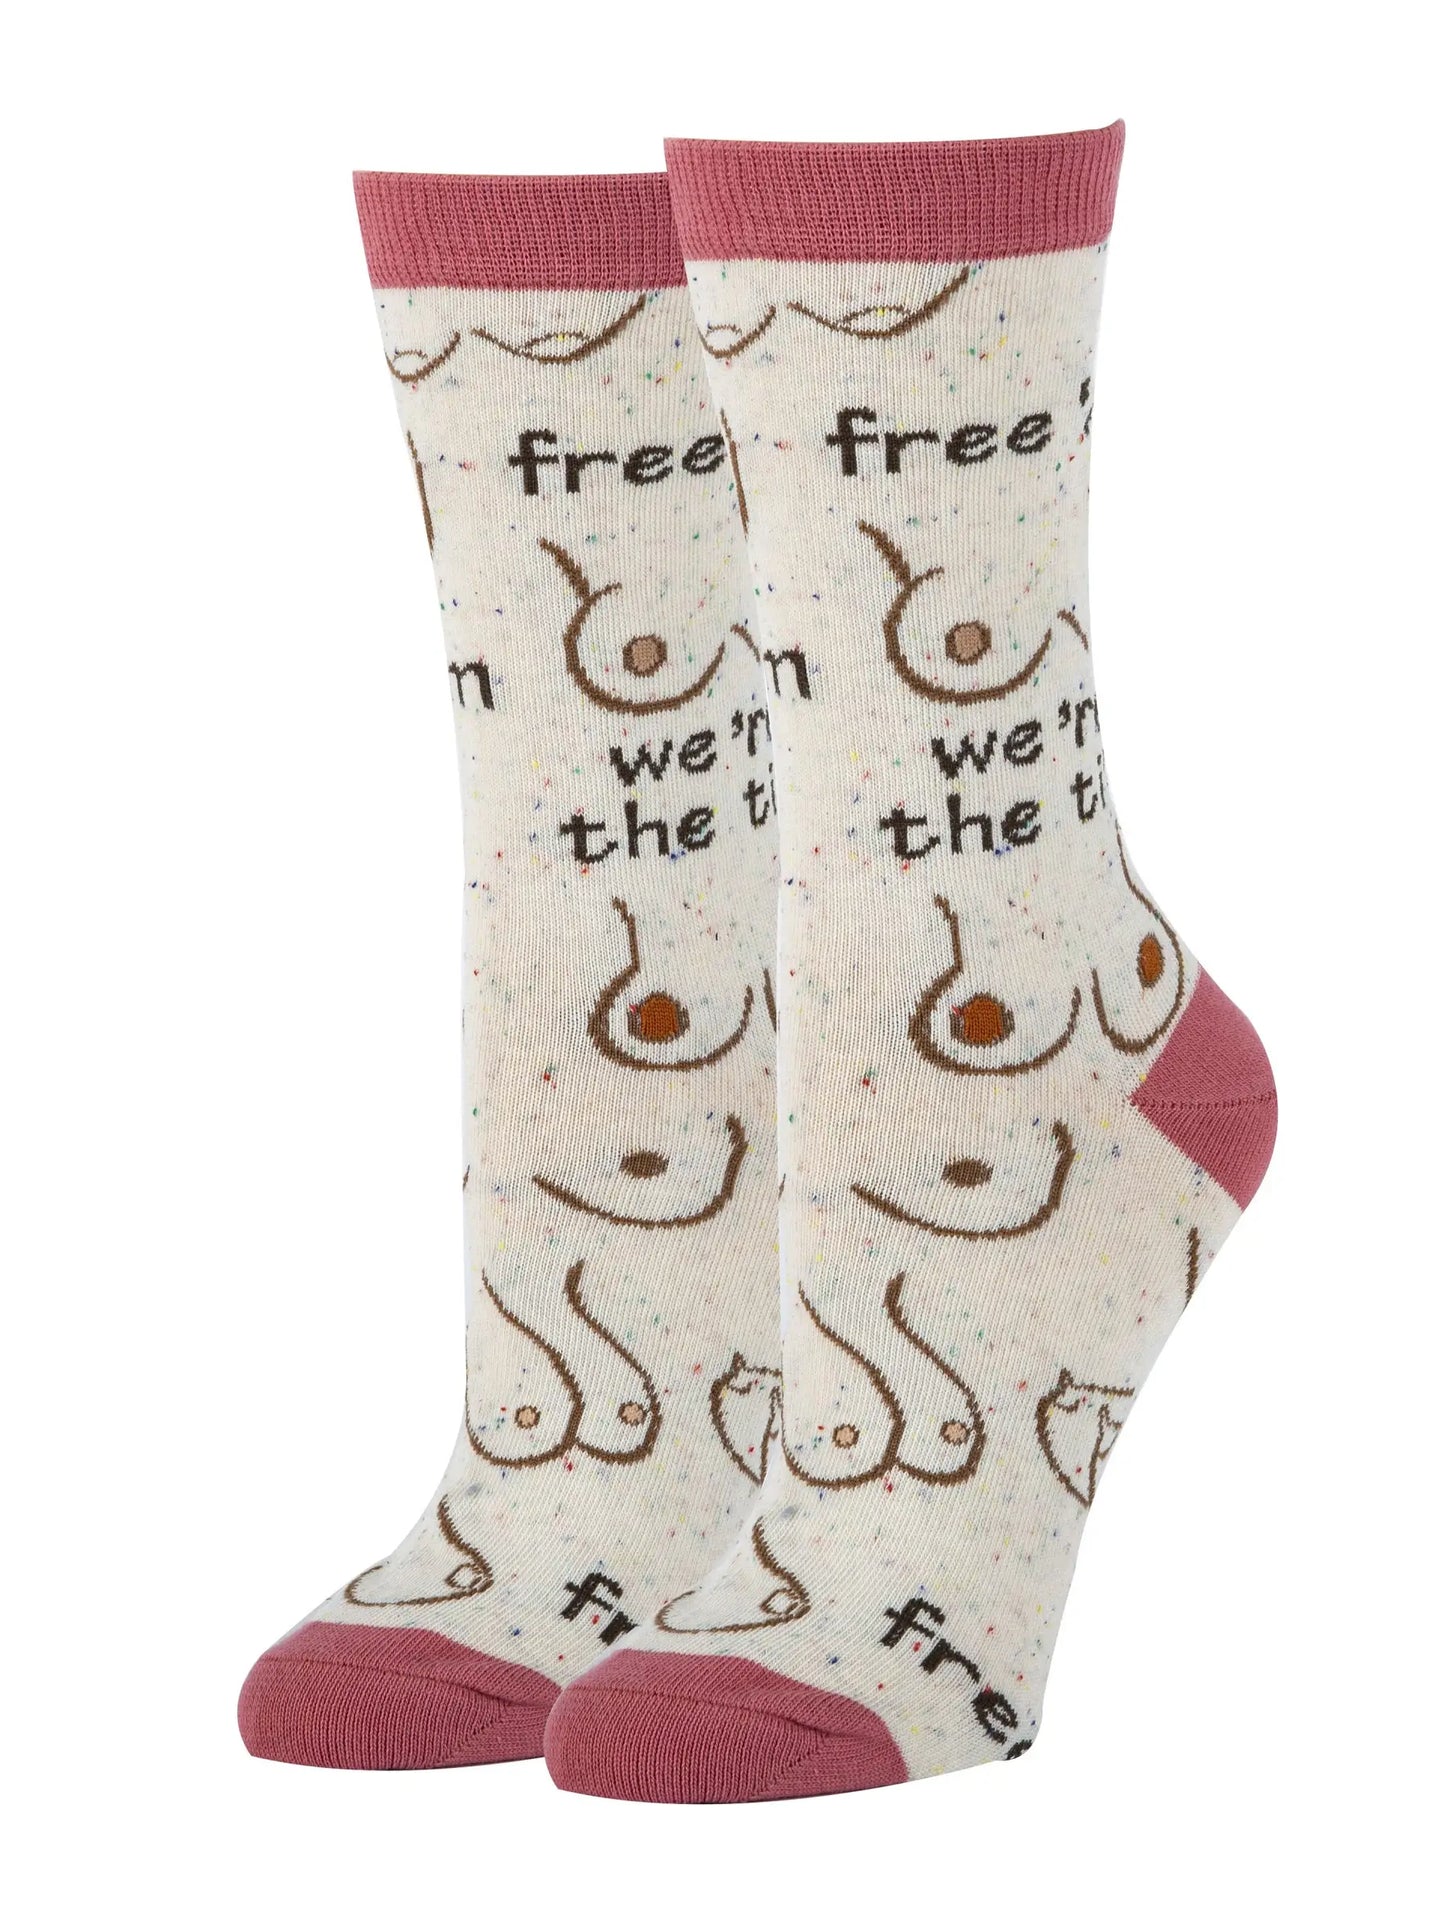 Free 'EM Boobies | Women's Funny Cotton Crew Socks